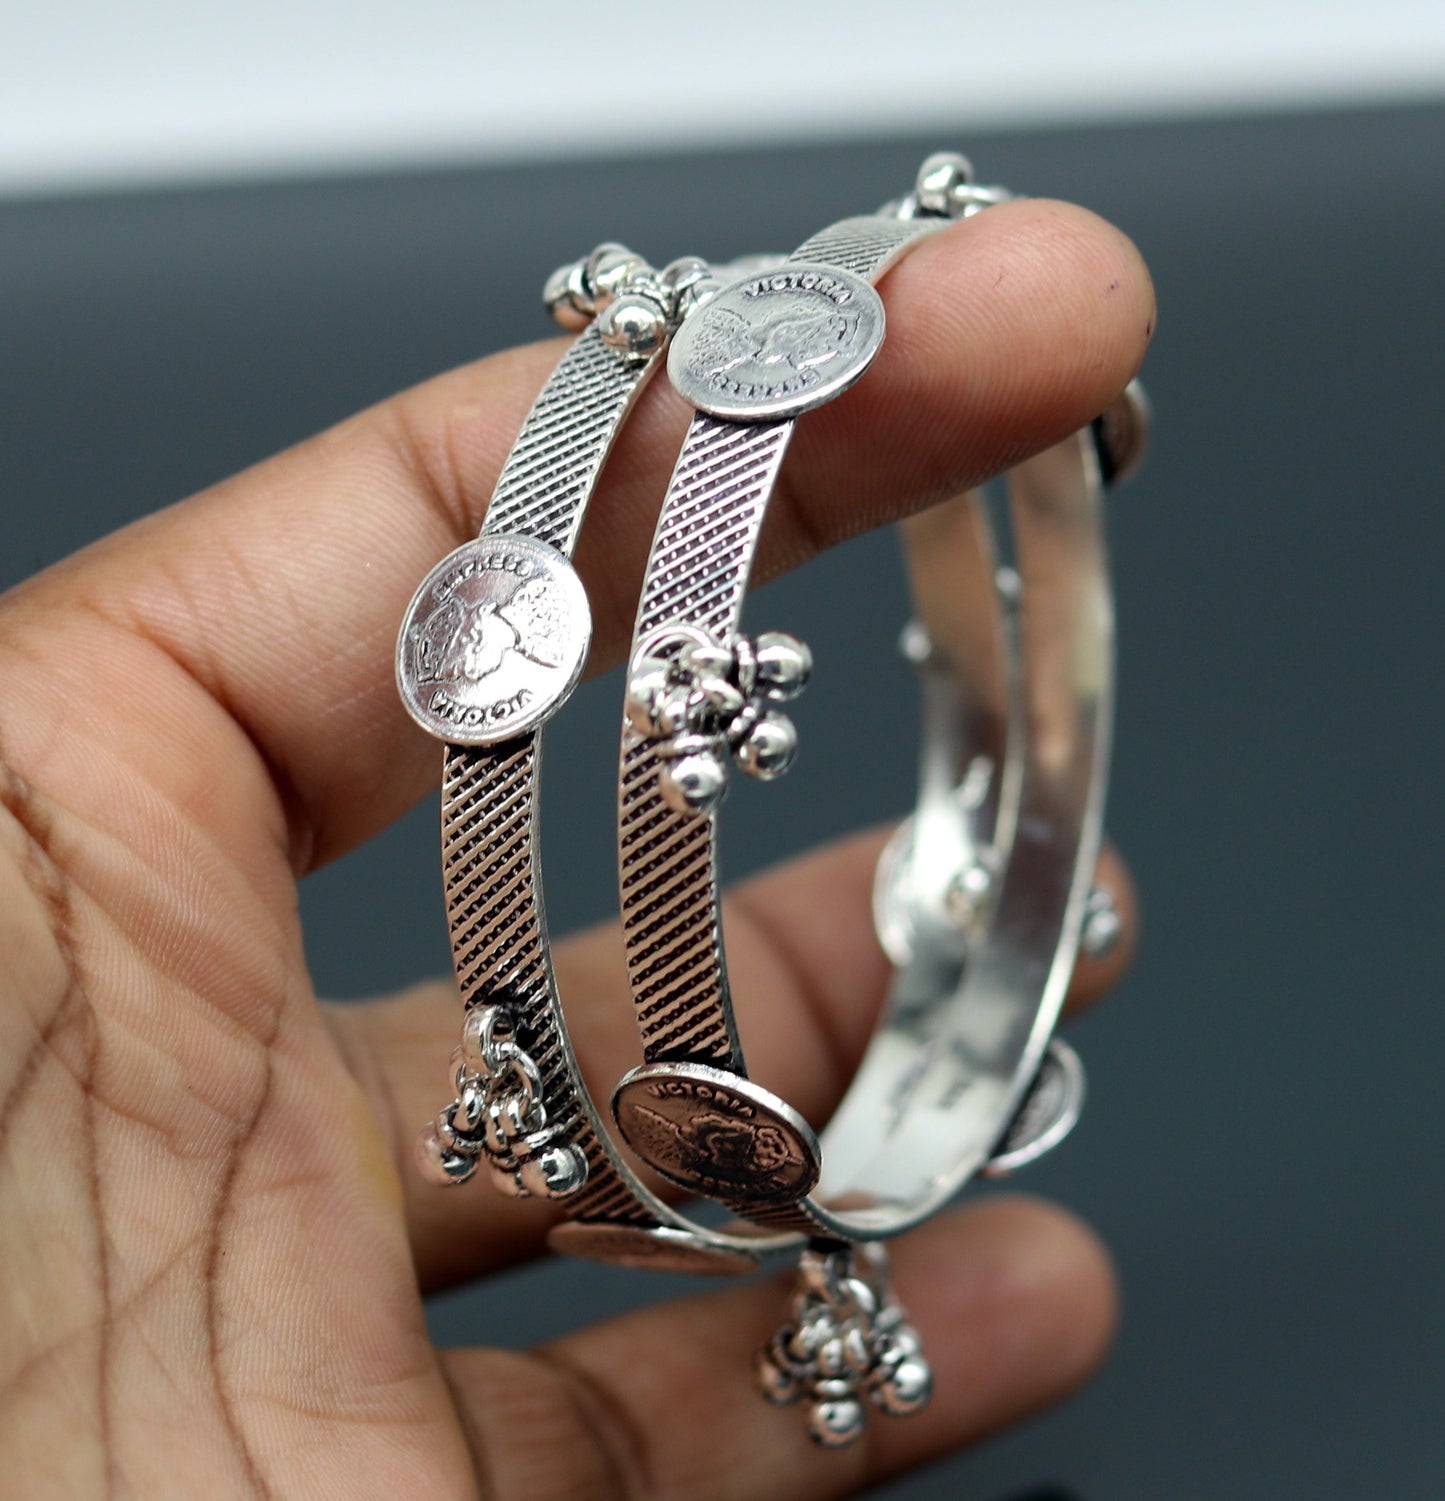 925 sterling silver handmade stunning Victoria empress coin design Bangles bracelet kada, best brides tribal belly jewelry nba155 - TRIBAL ORNAMENTS